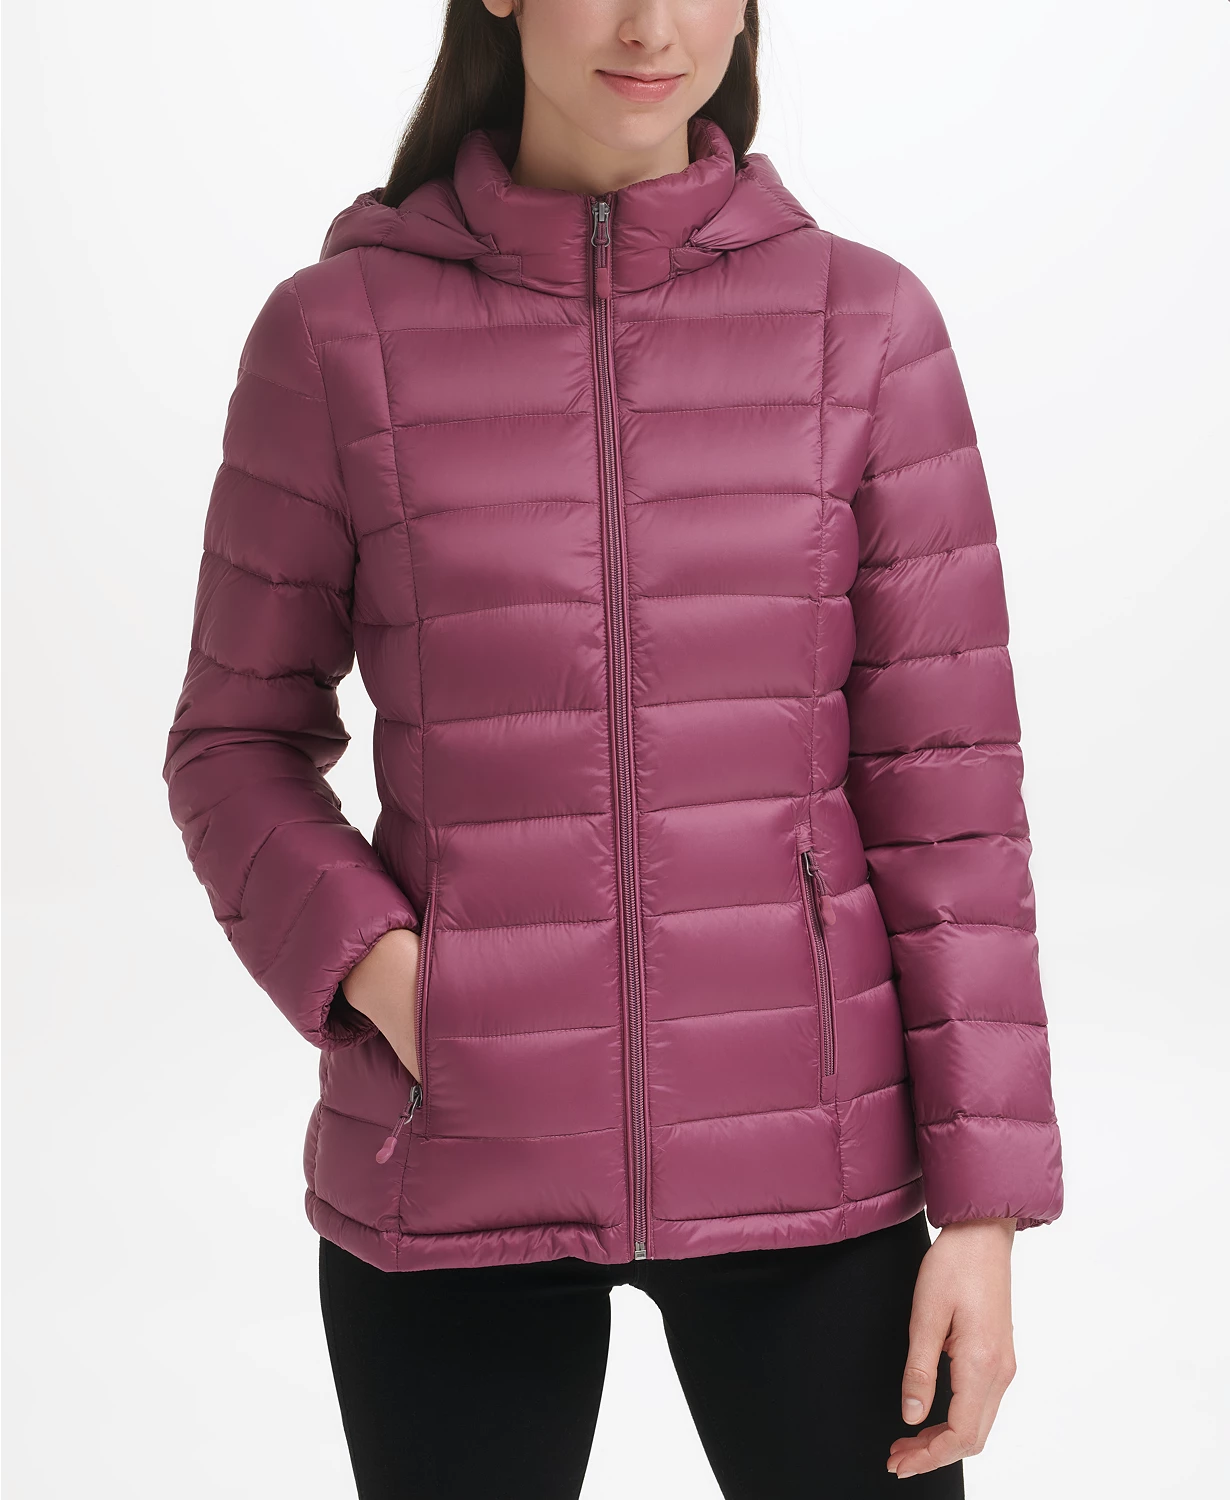 Macy’s: Women’s Packable Down Puffer Coat $49.99